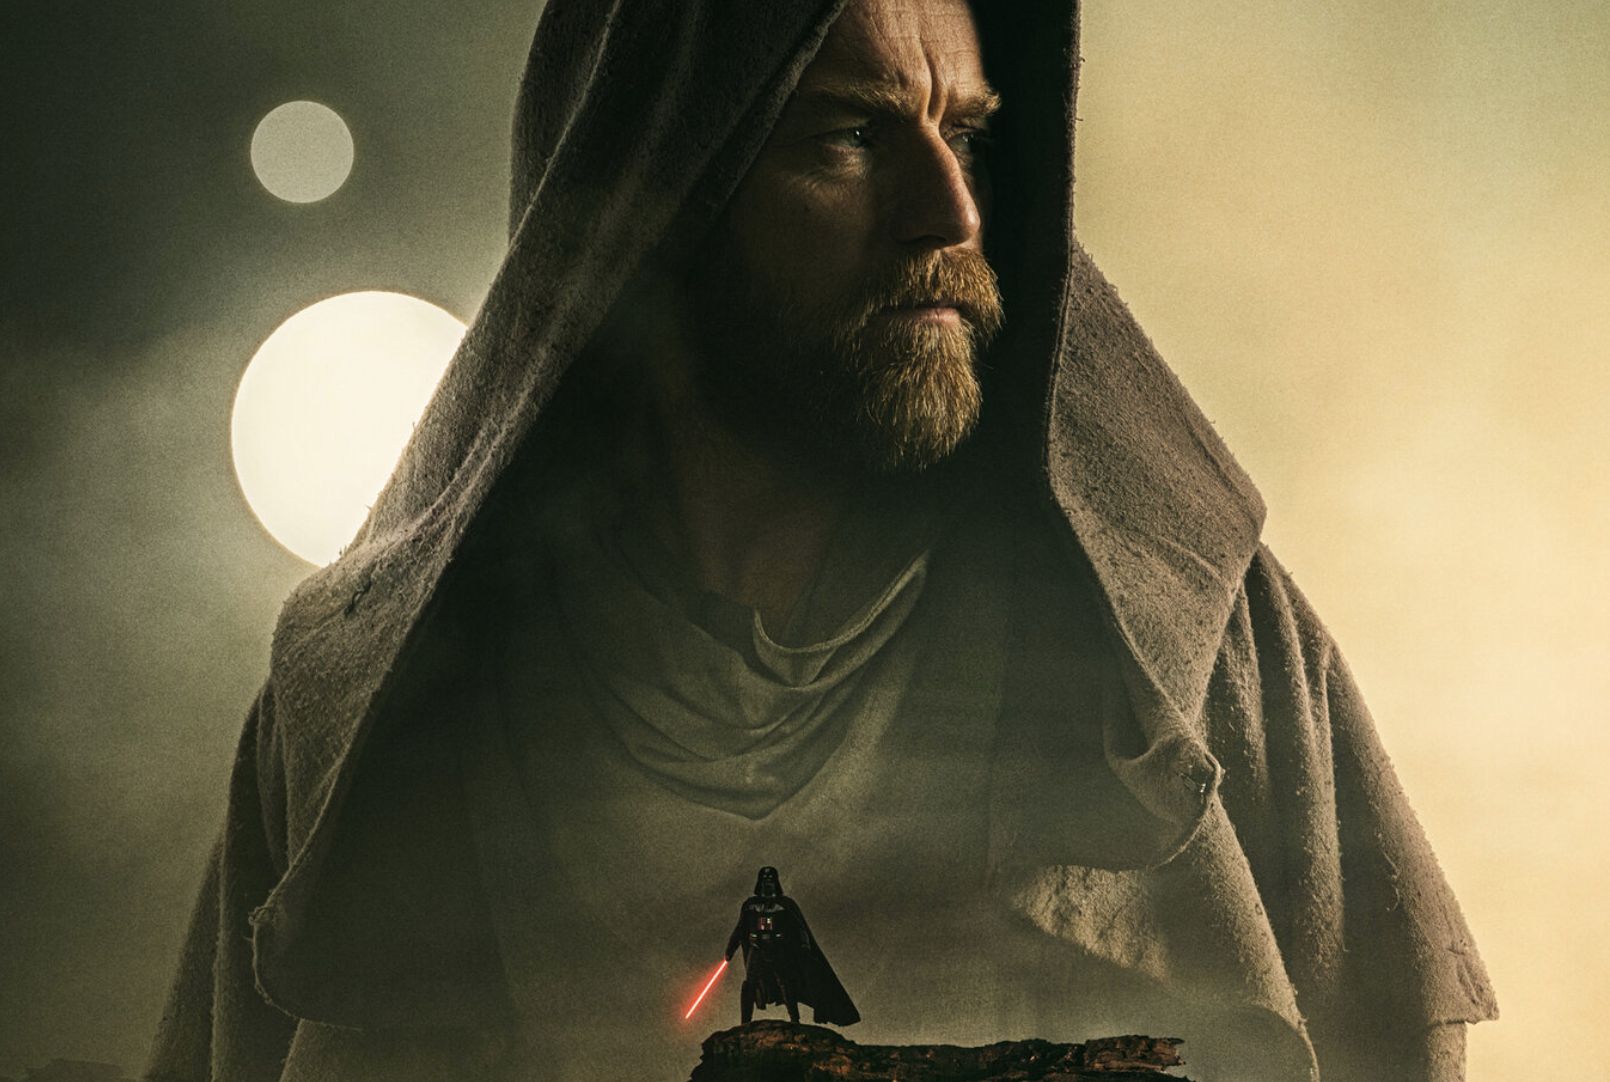 Obi-Wan Kenobi: Liam Neeson Shoots Down Qui-Gon Jinn Hopes